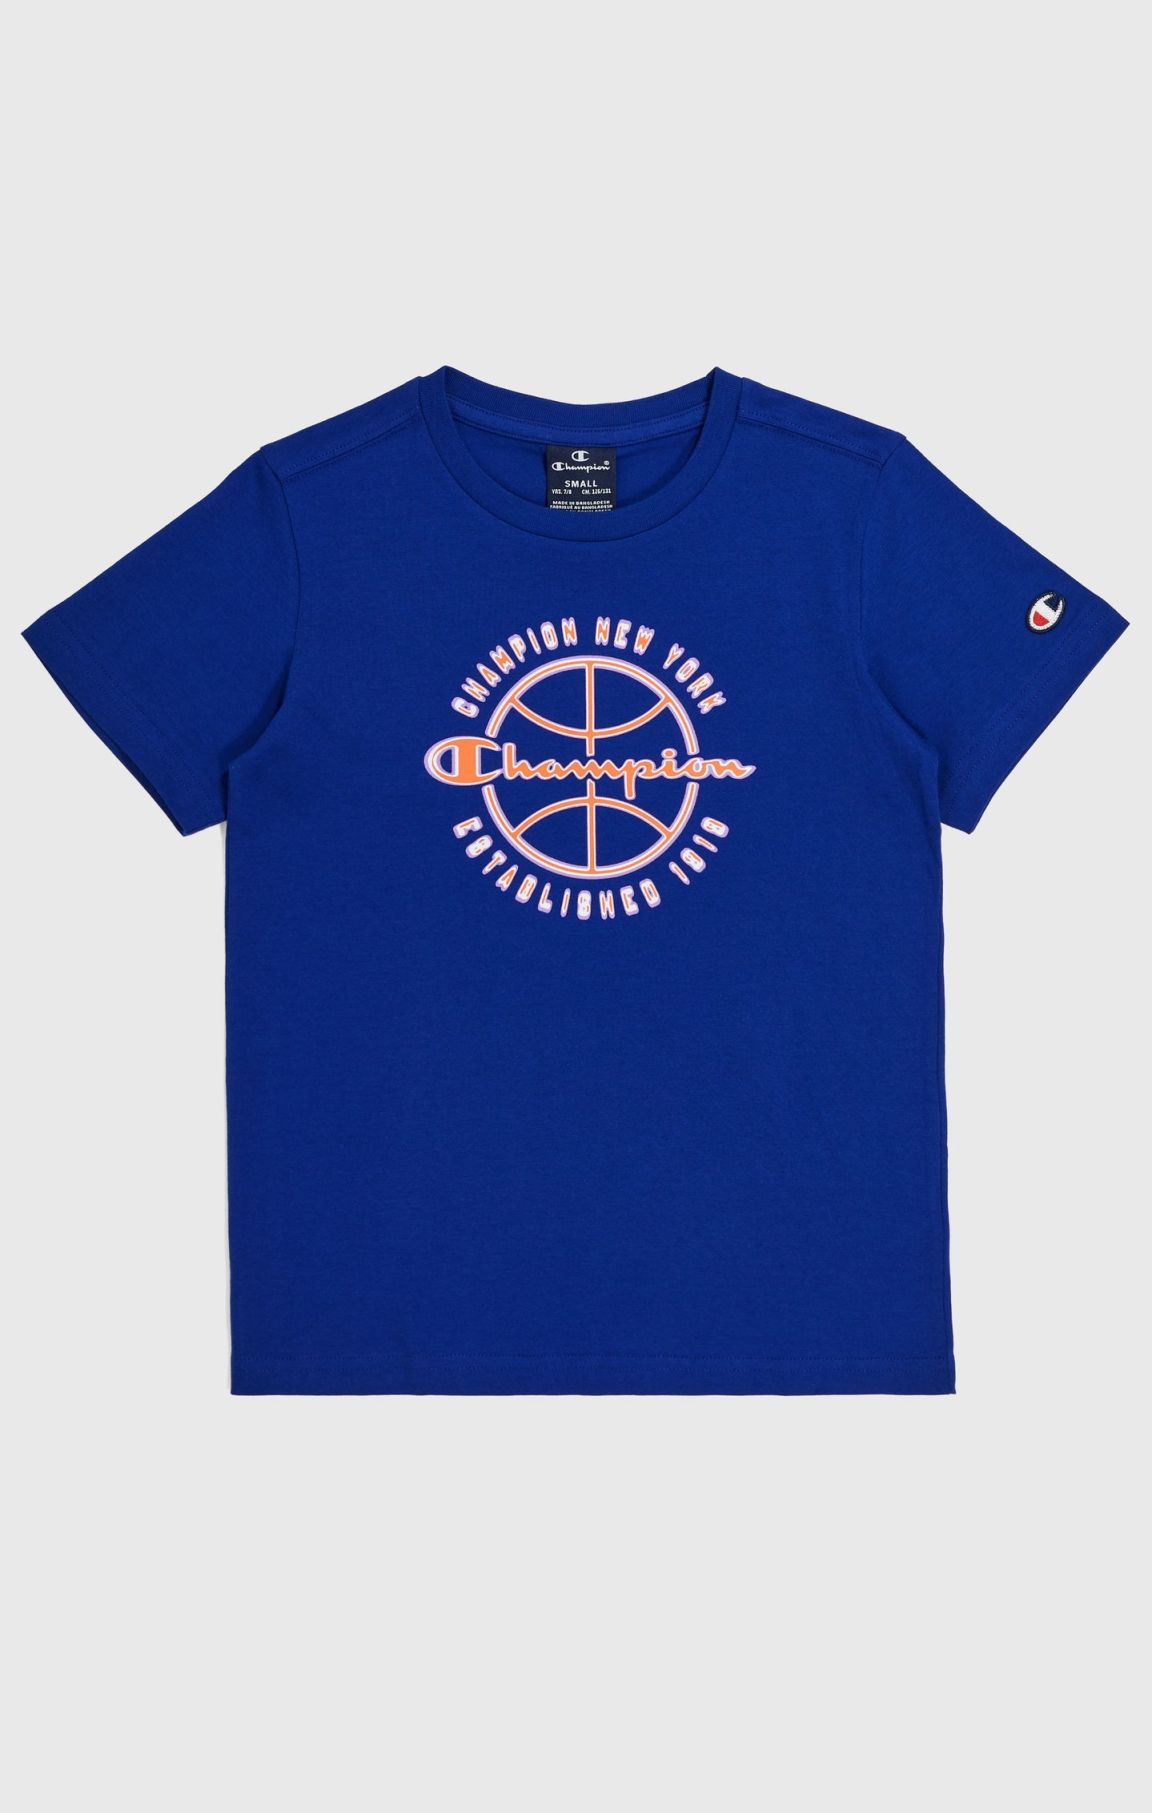 Camiseta de niño de baloncesto de algodón